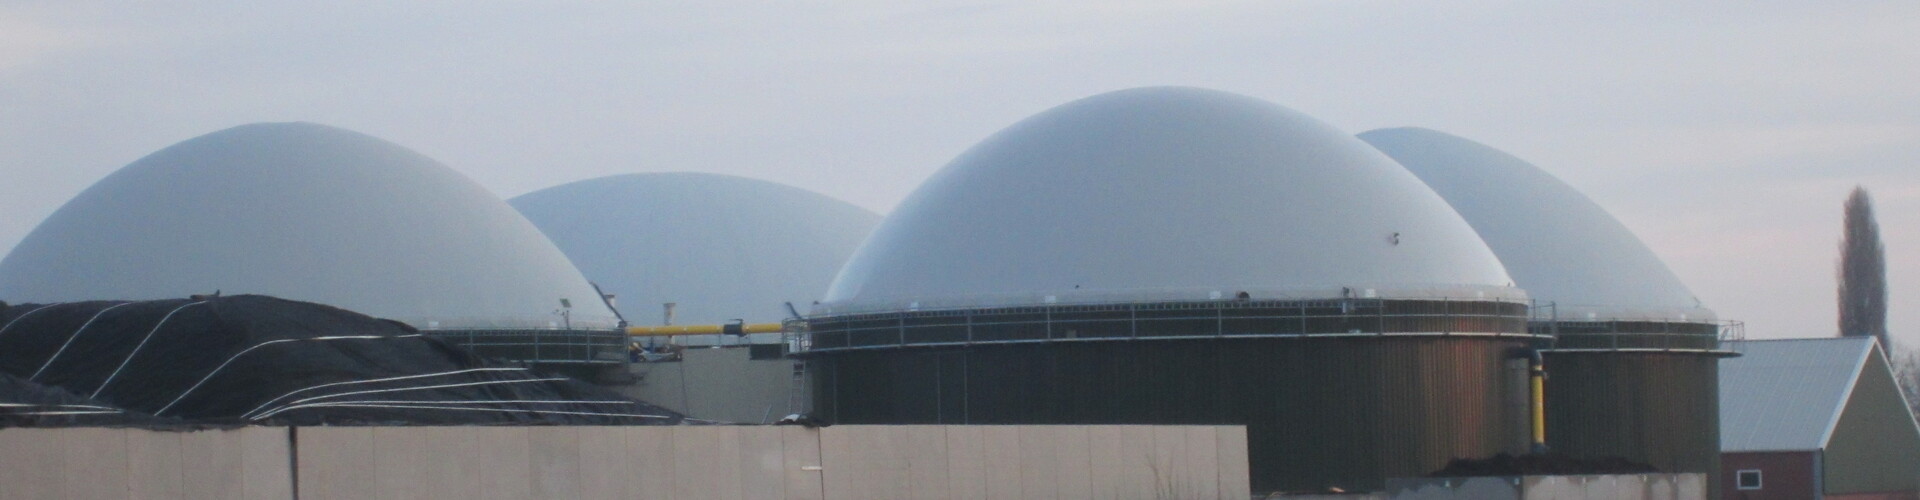 Biogas installation Horst, Netherlands